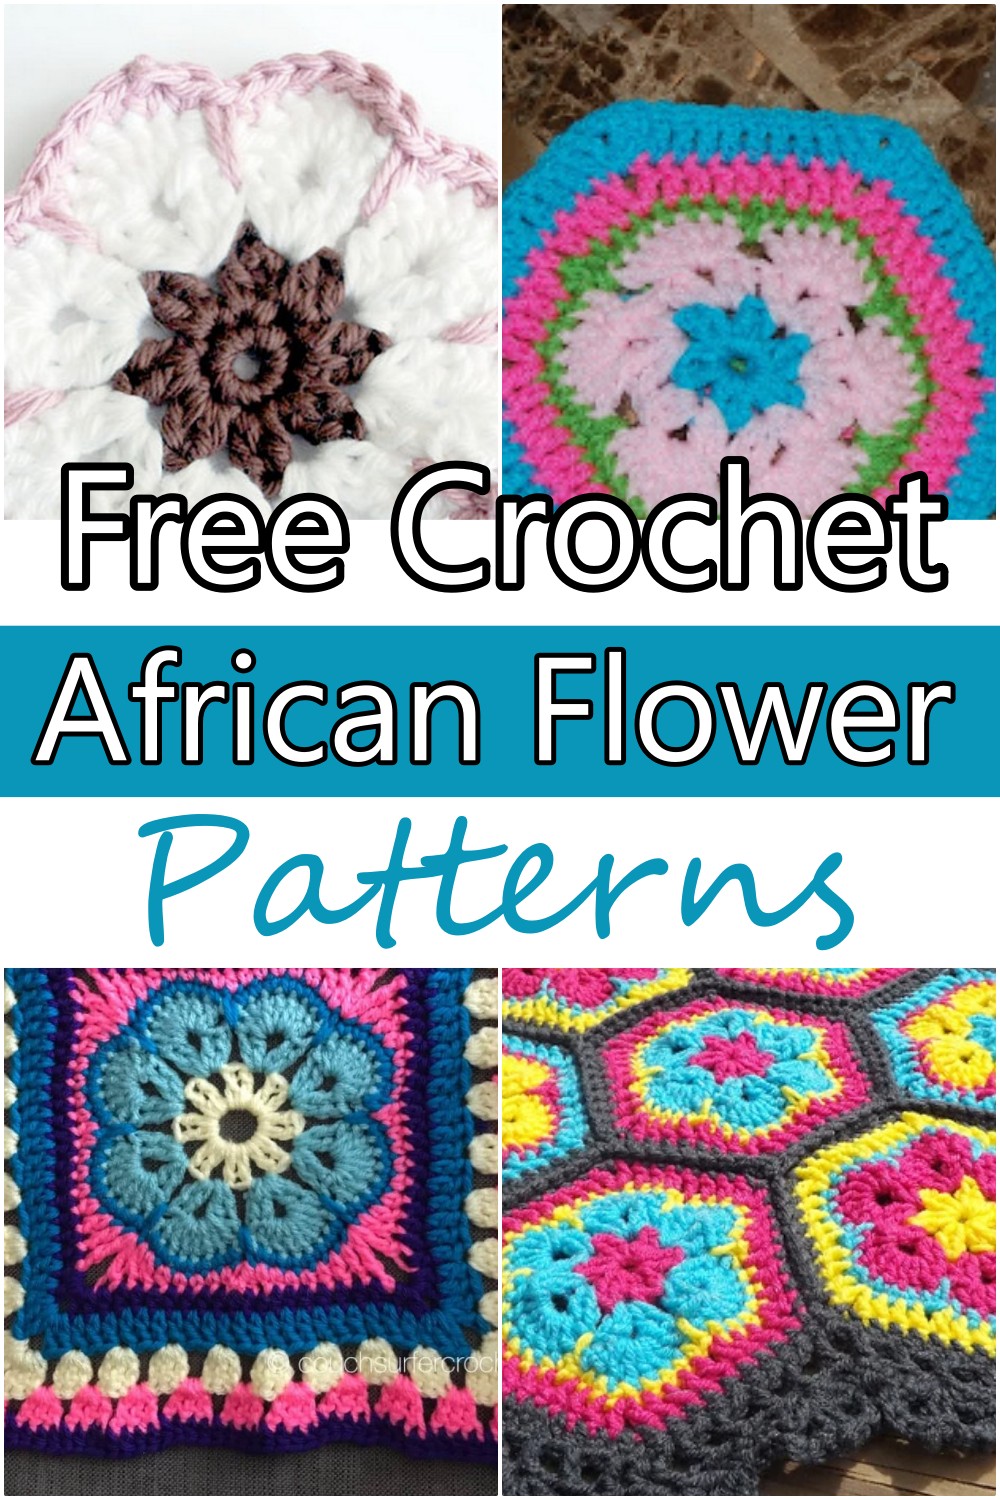 Free Crochet African Flower Patterns